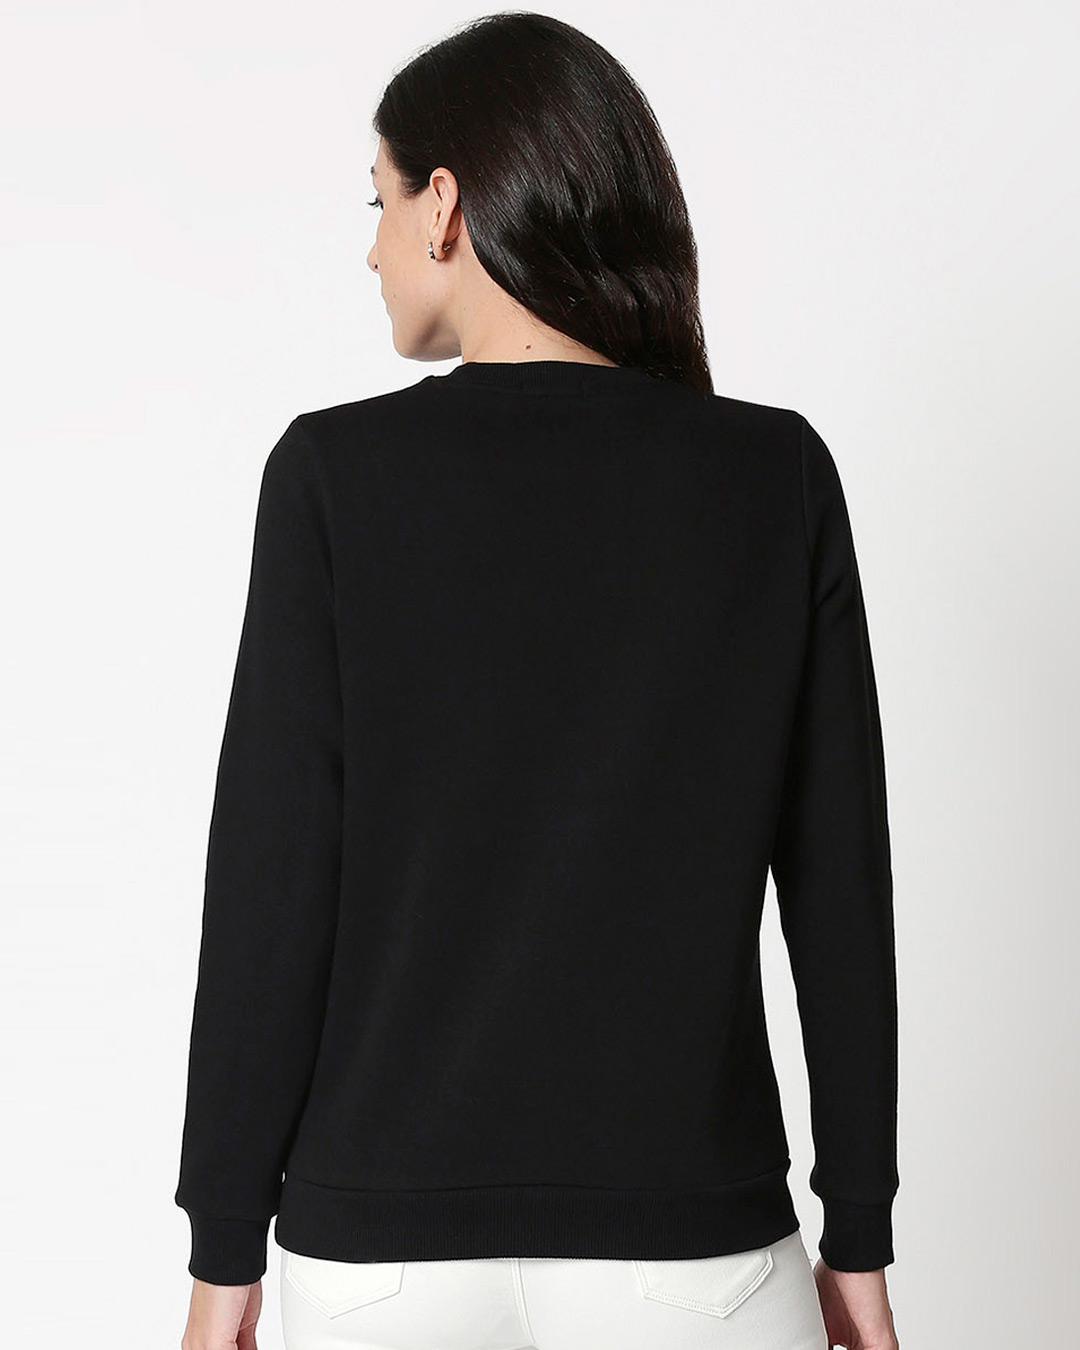 Shop Travel Far Enough Fleece Sweatshirt Black-Back